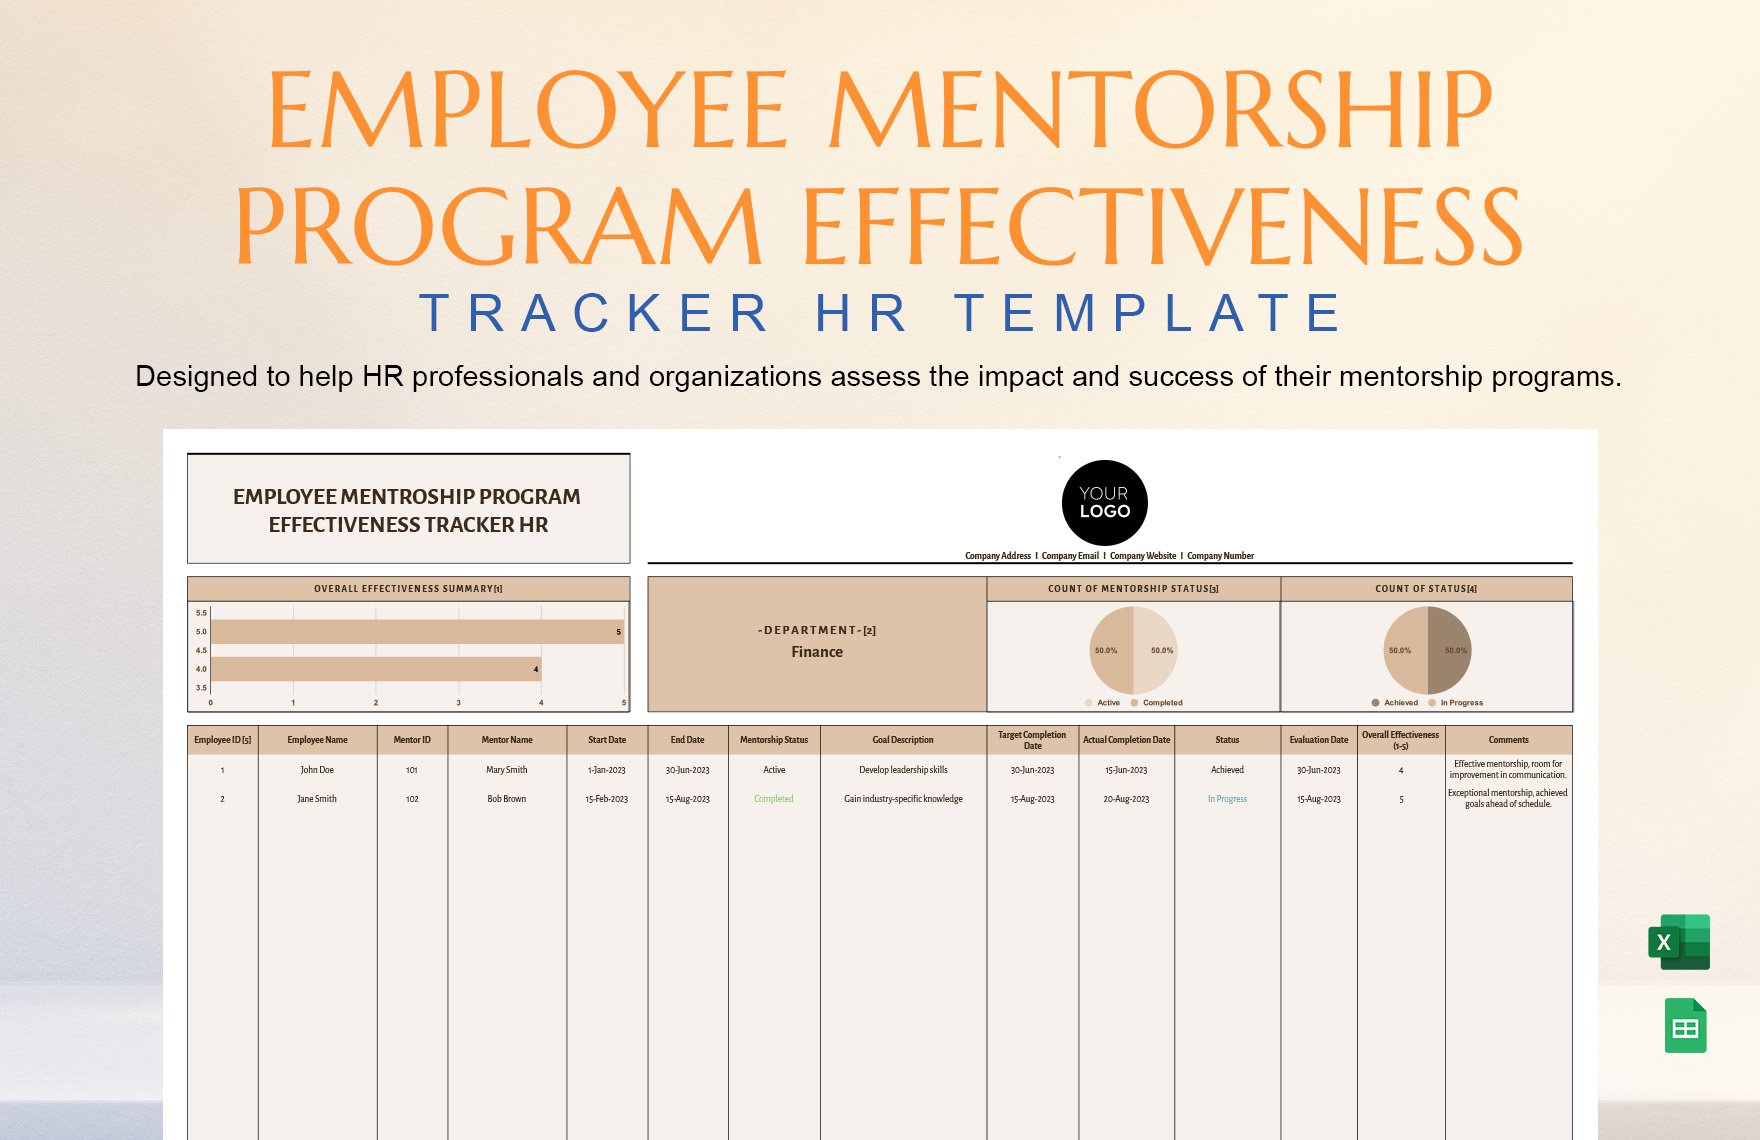 Employee Mentorship Program Effectiveness Tracker HR Template